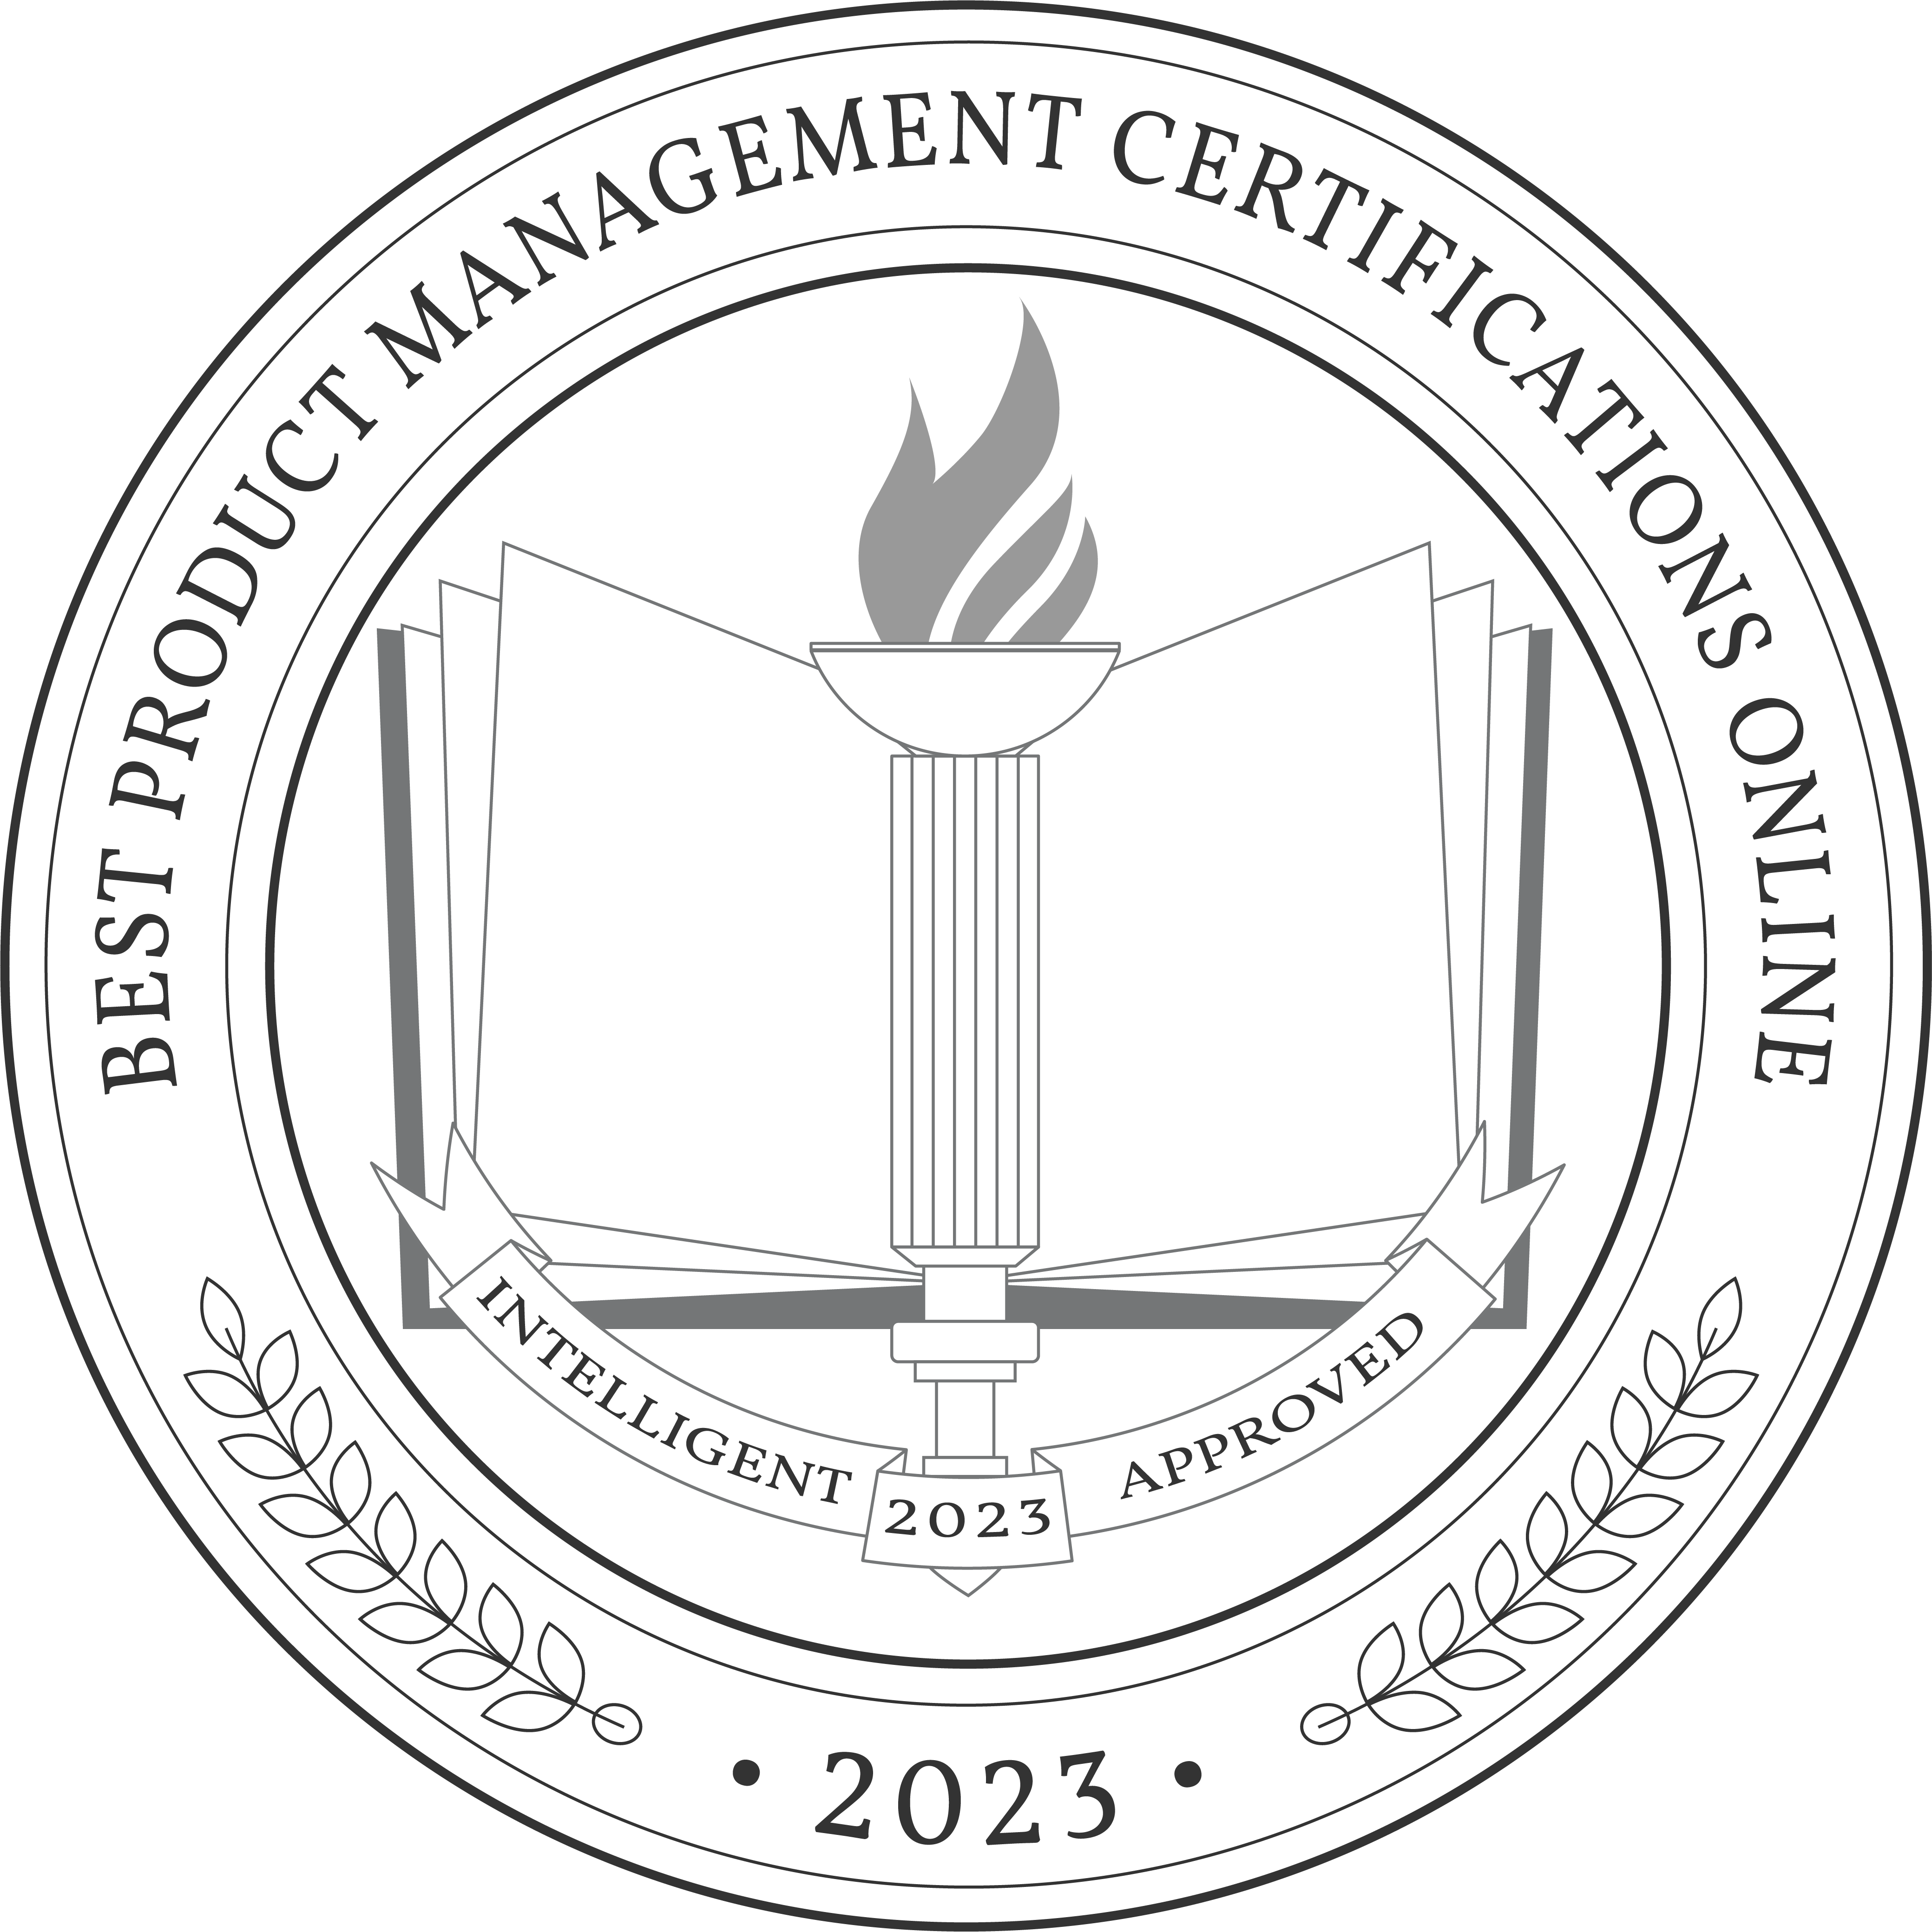 Best Product Management Certifications Online badge